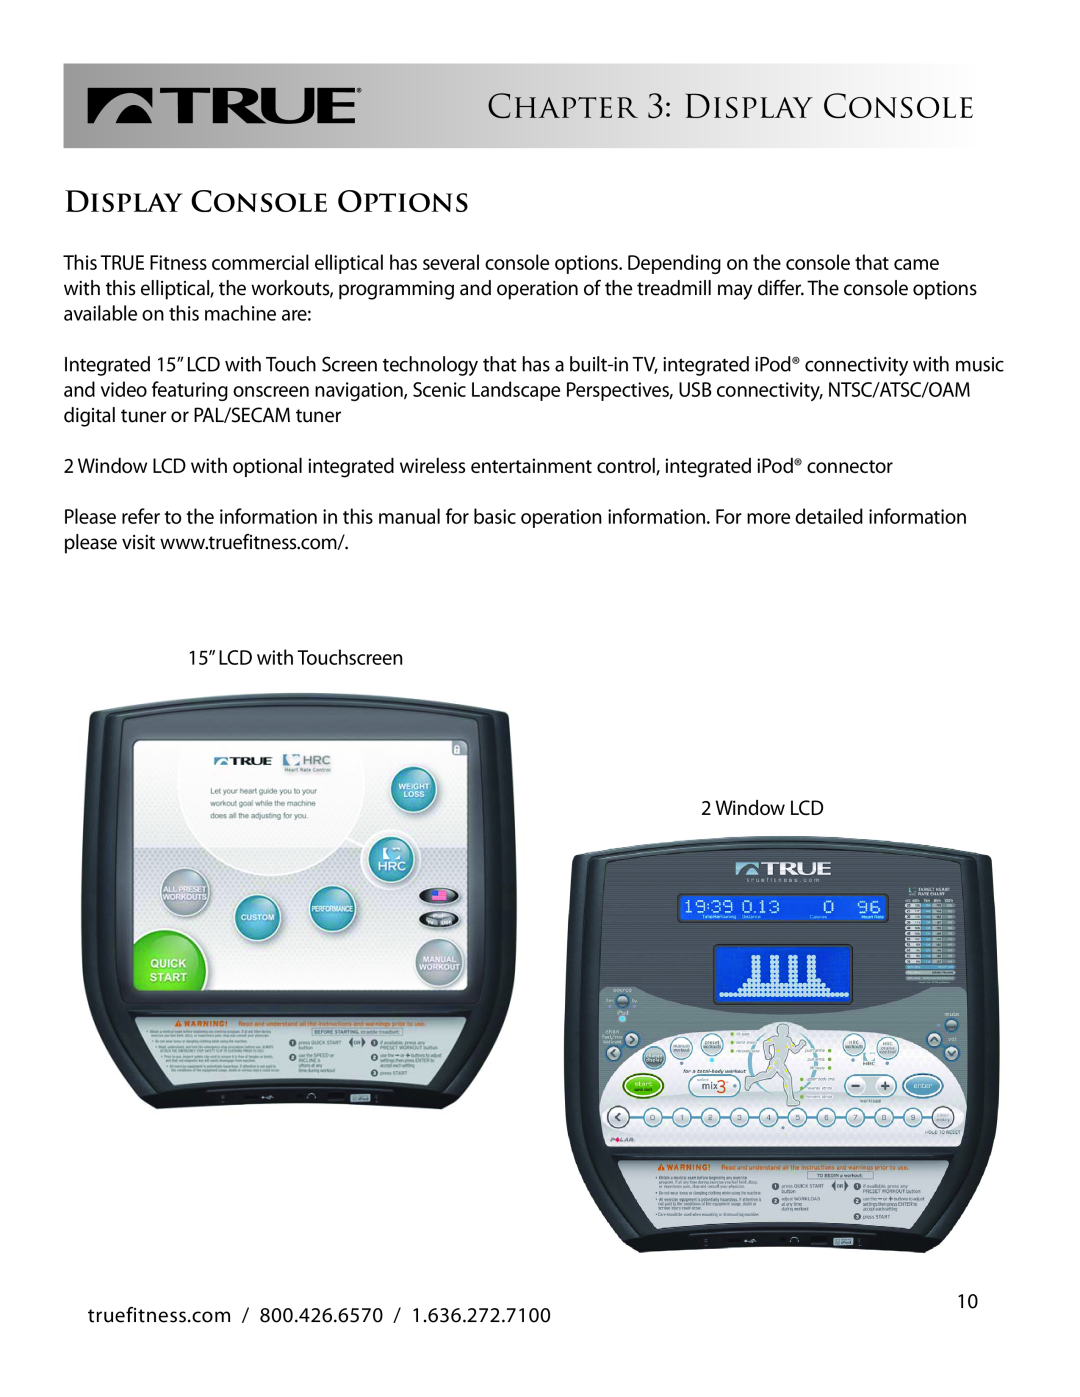 True Fitness CS800 manual Display Console Options 